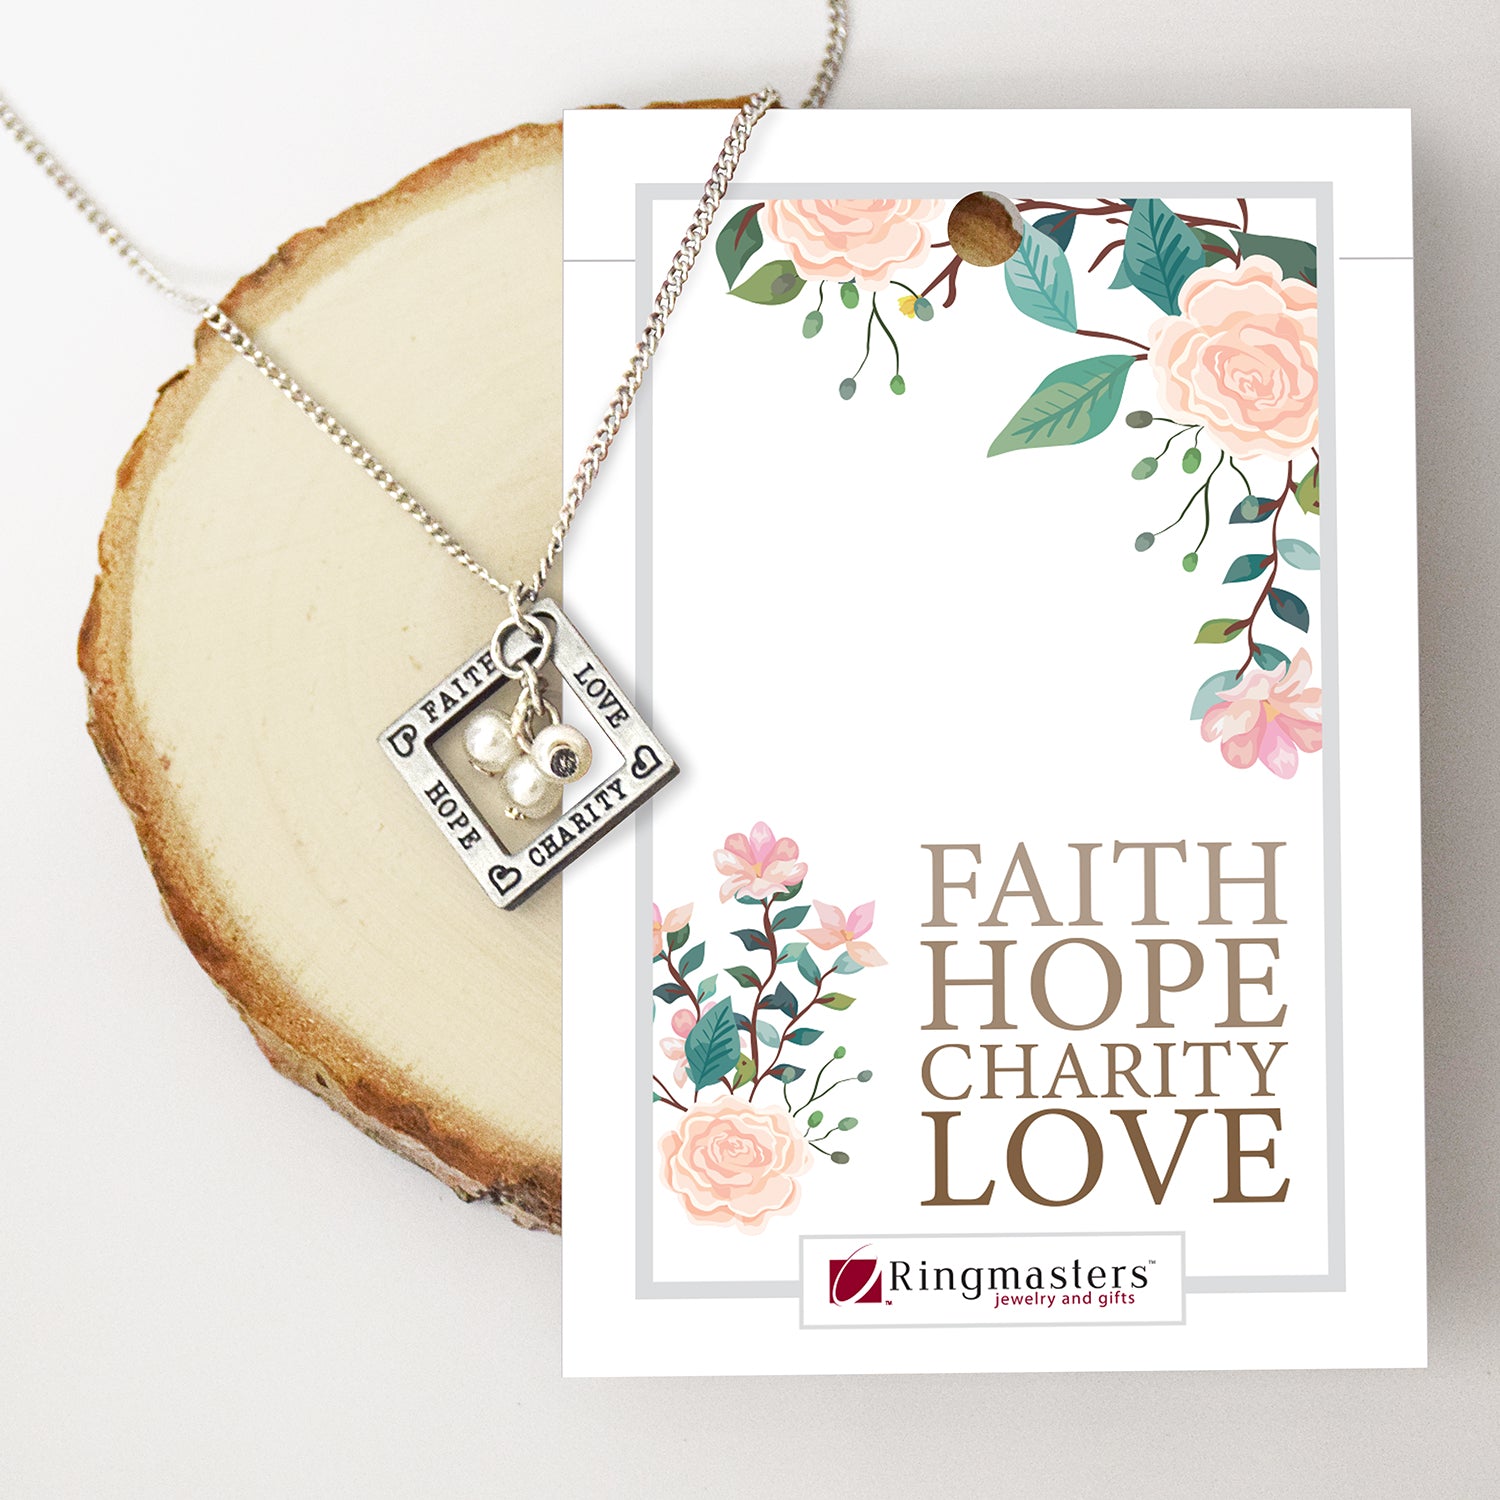 Faith, Hope, Charity Charm | Rembrandt Charms